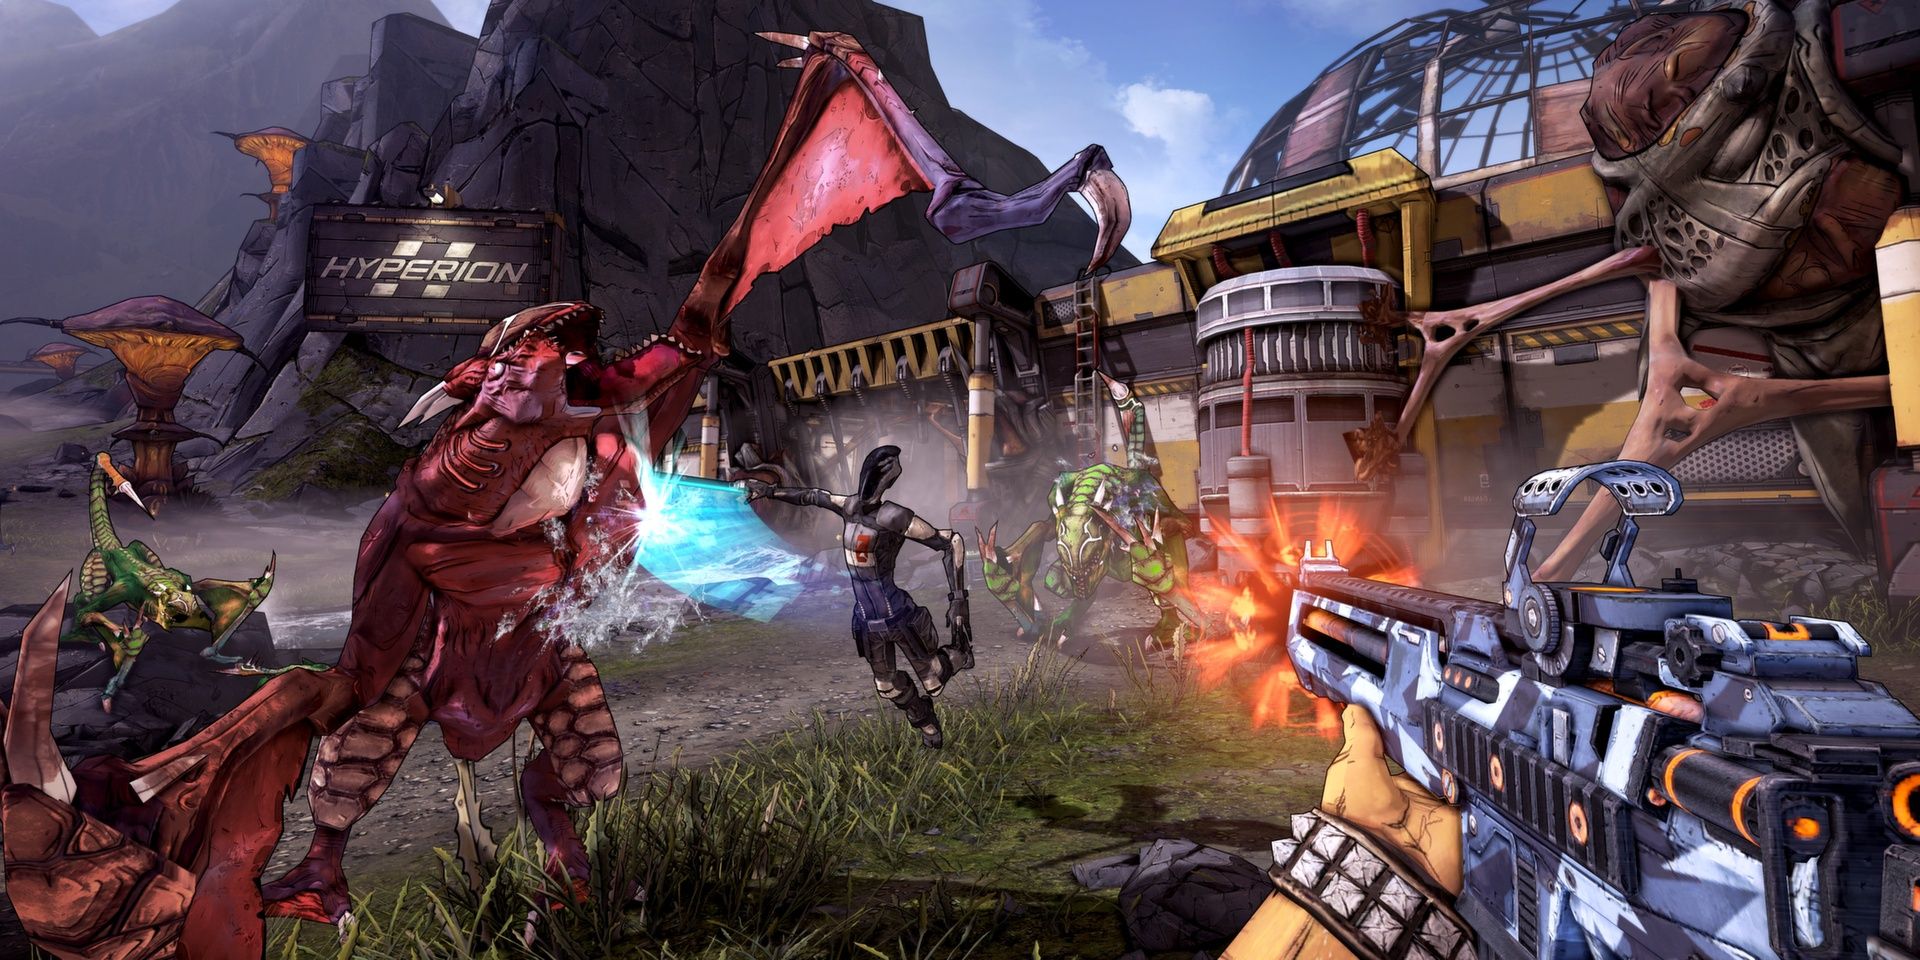 A screenshot showing gameplay in Borderlands 2